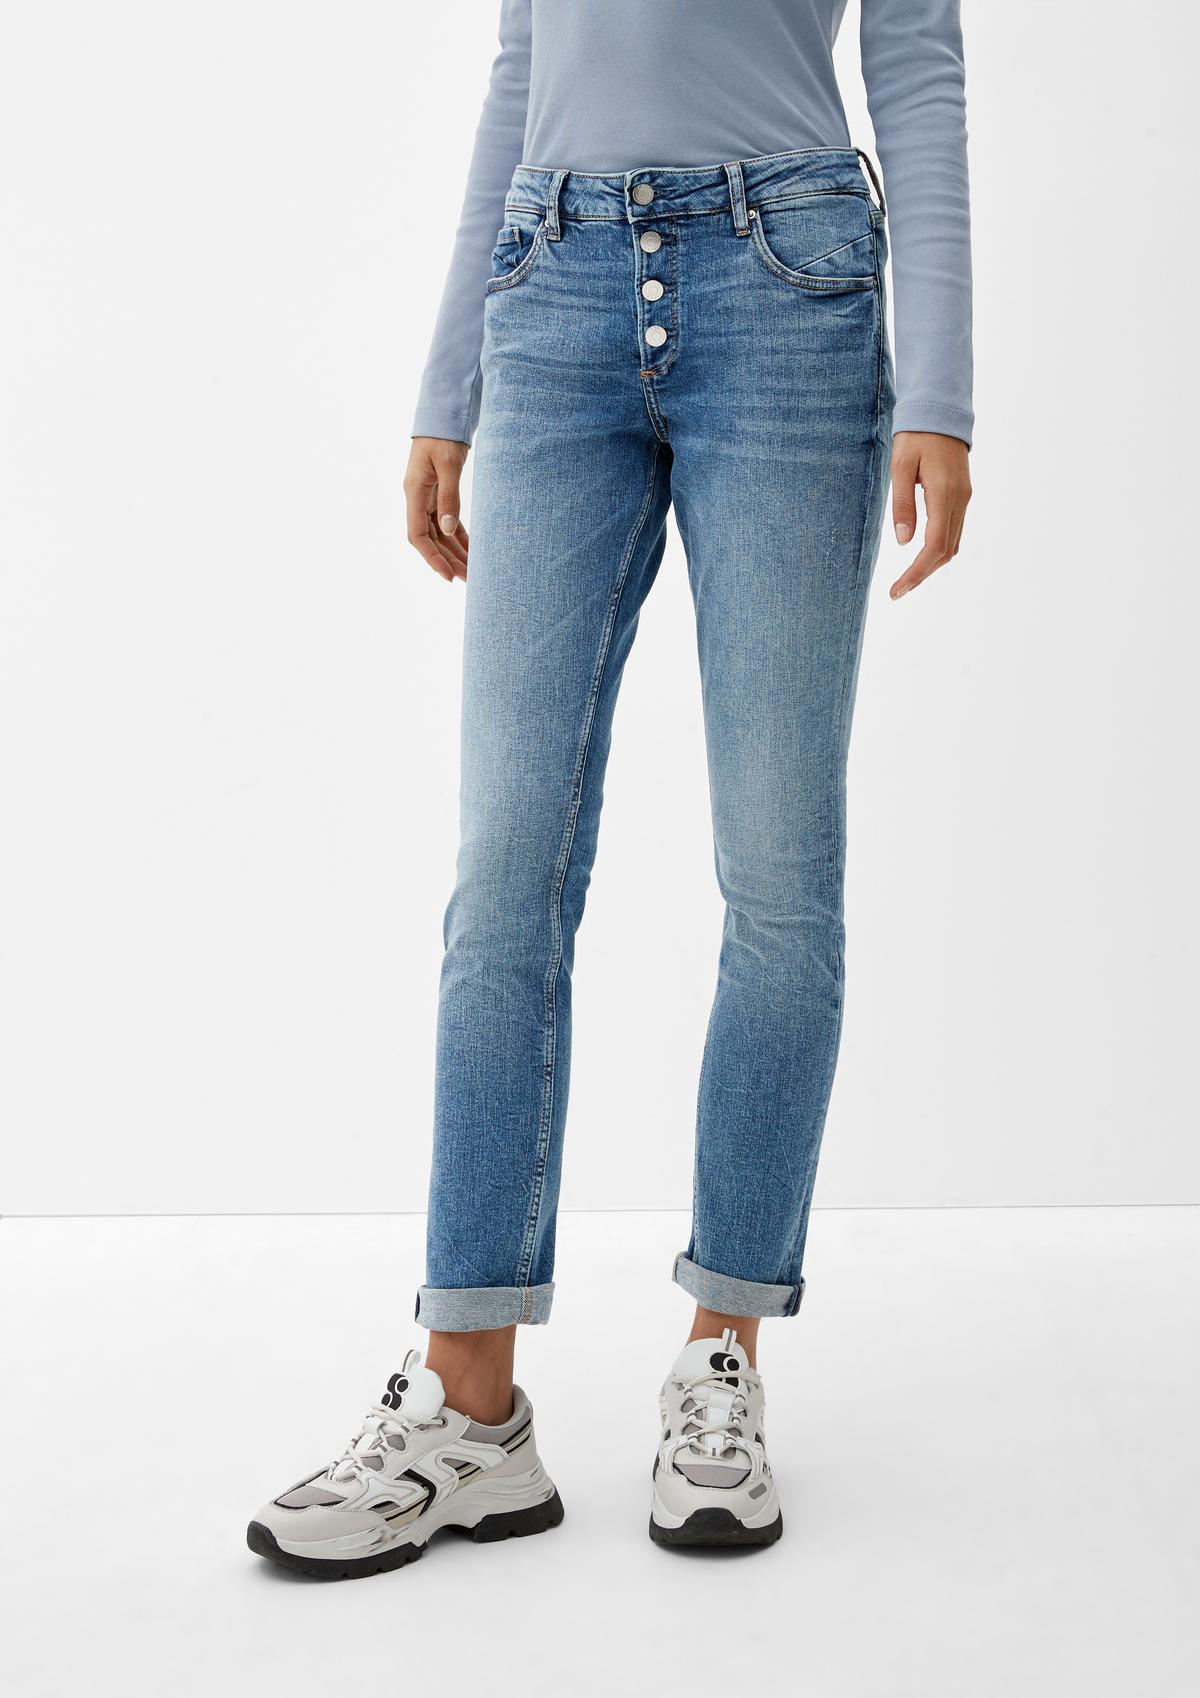 s.Oliver Catie jeans / slim fit / mid rise / slim leg